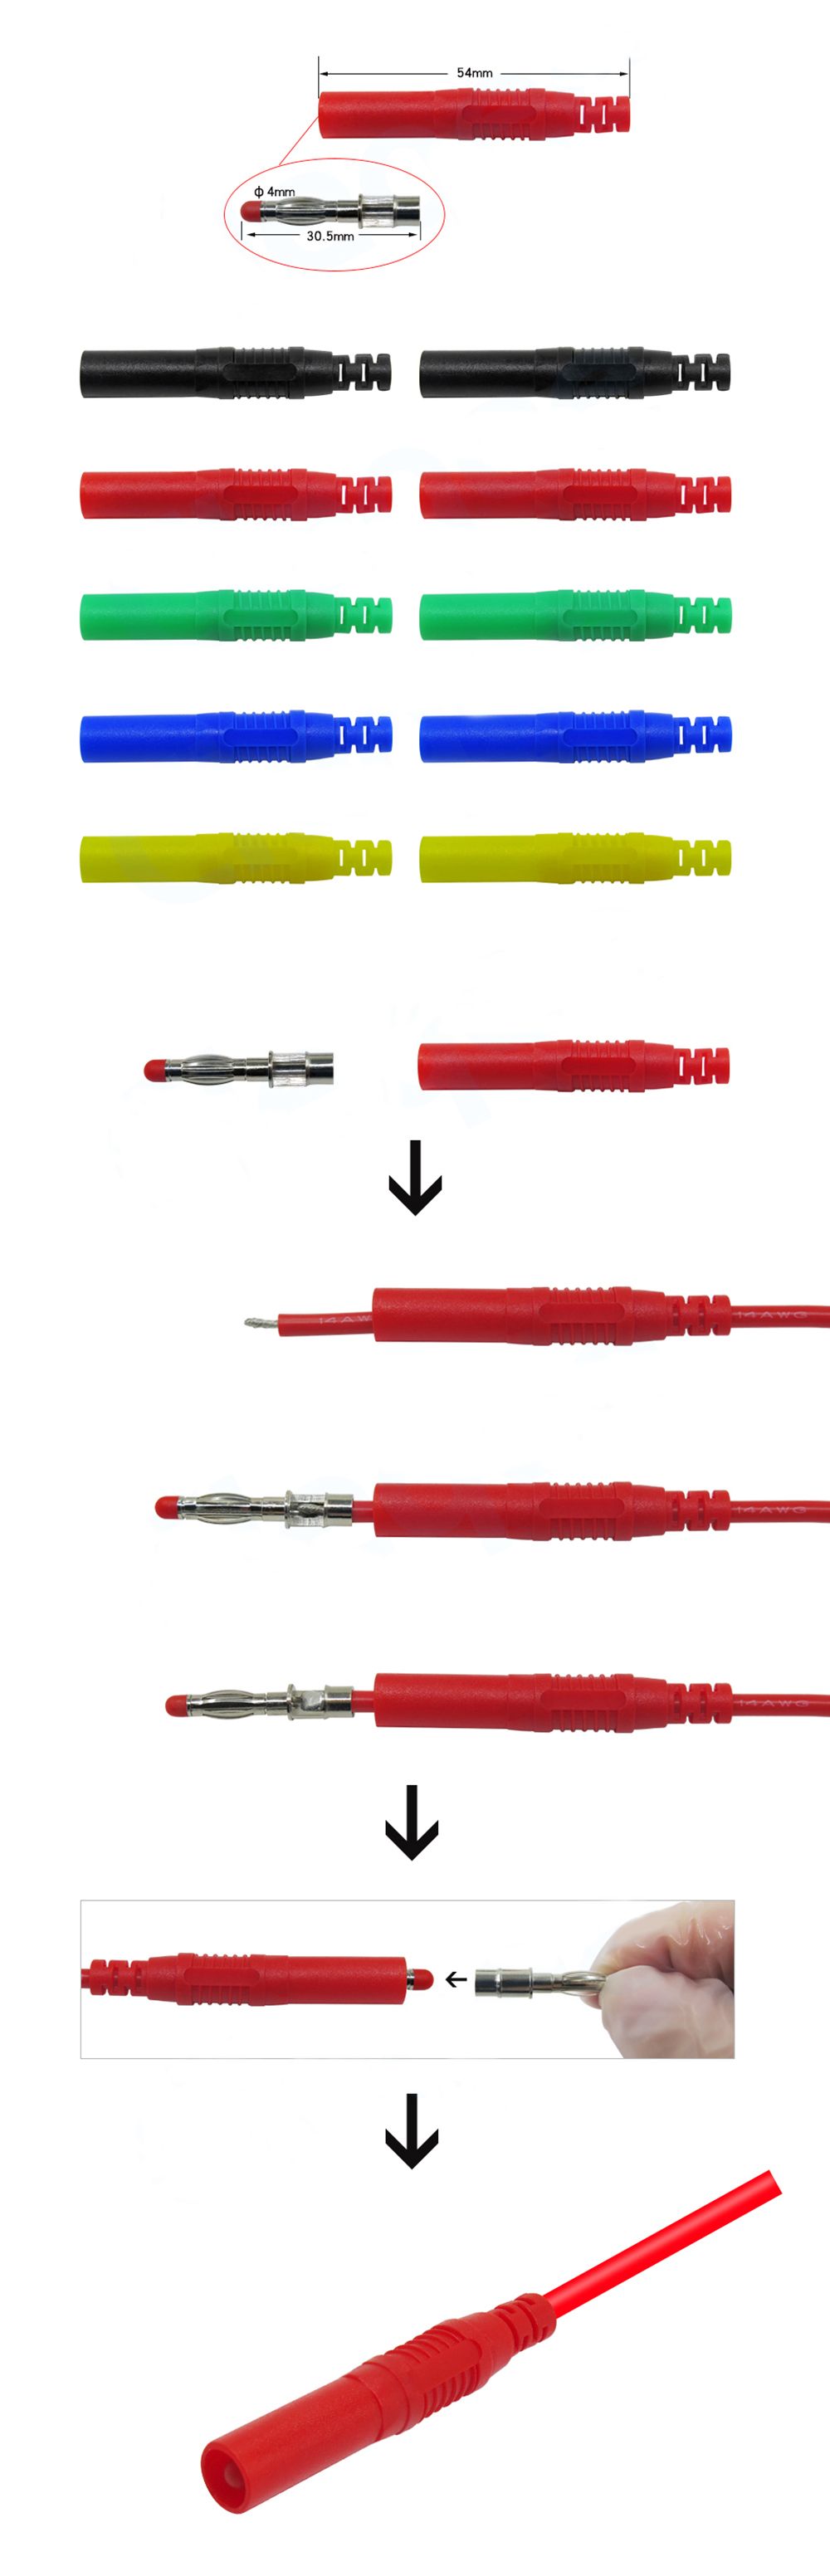 10Pcs-P3013-4mm-Safety-Shrouded-Banana-Plug-Solder-In-line-DIY-Assembly-Test-Leads-Connectors-1423528